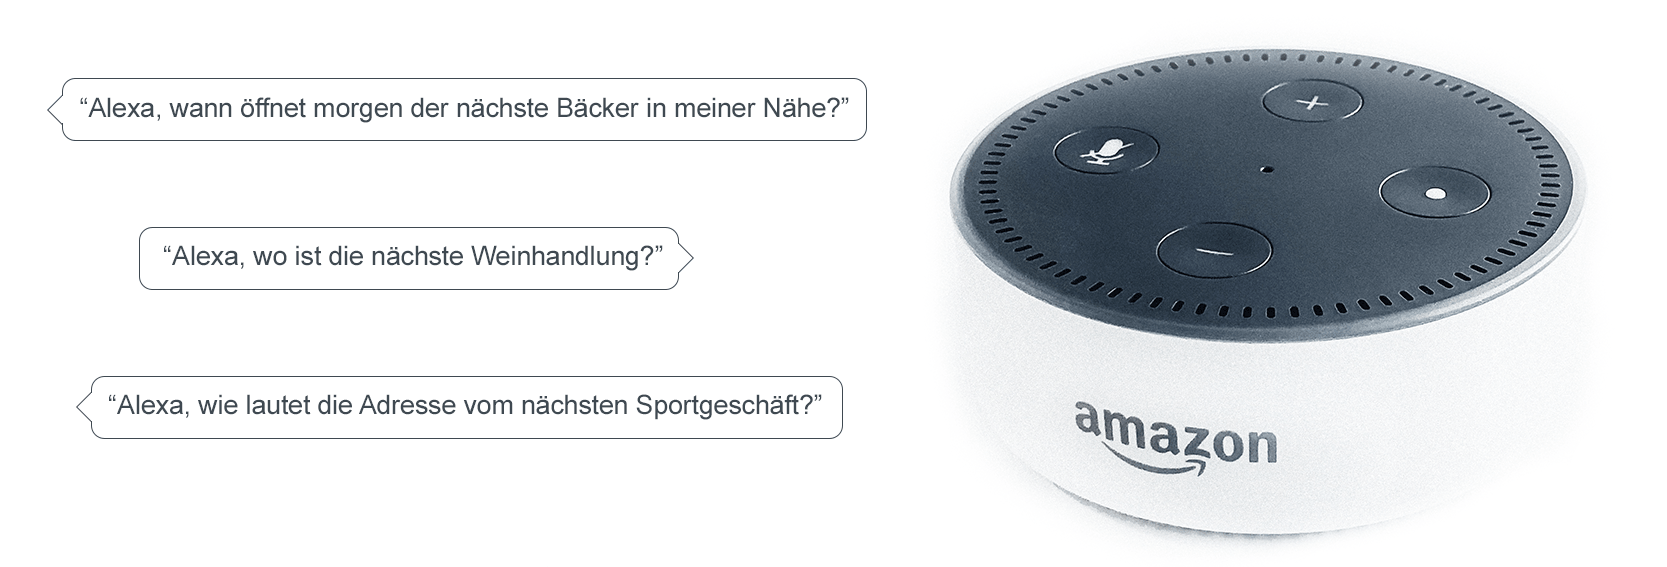 Amazon Alexa Fragen